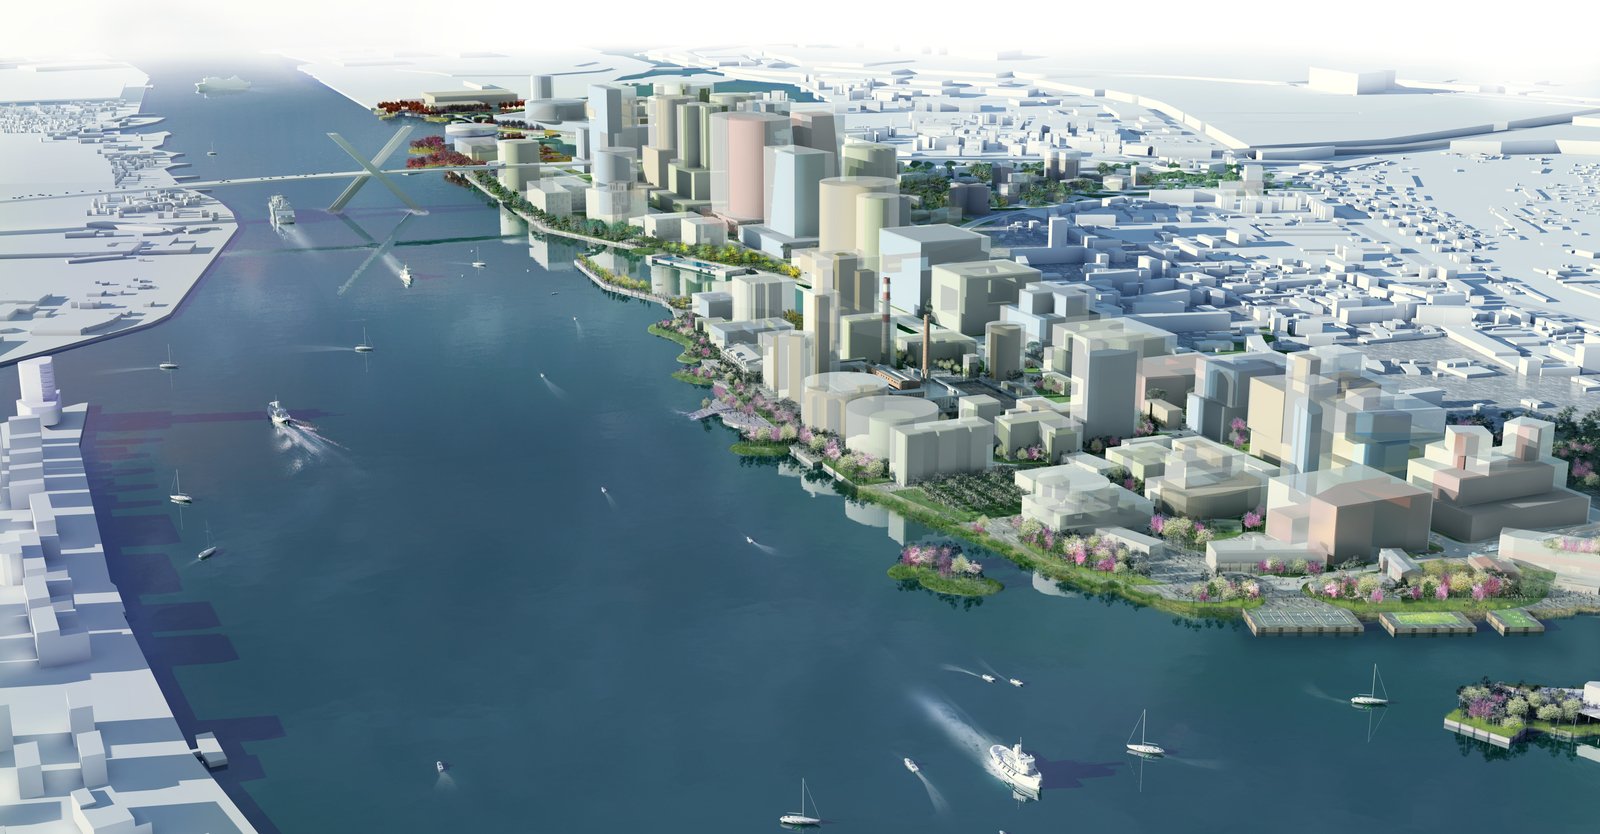 Riga Port City (Image: OMA visualisation)